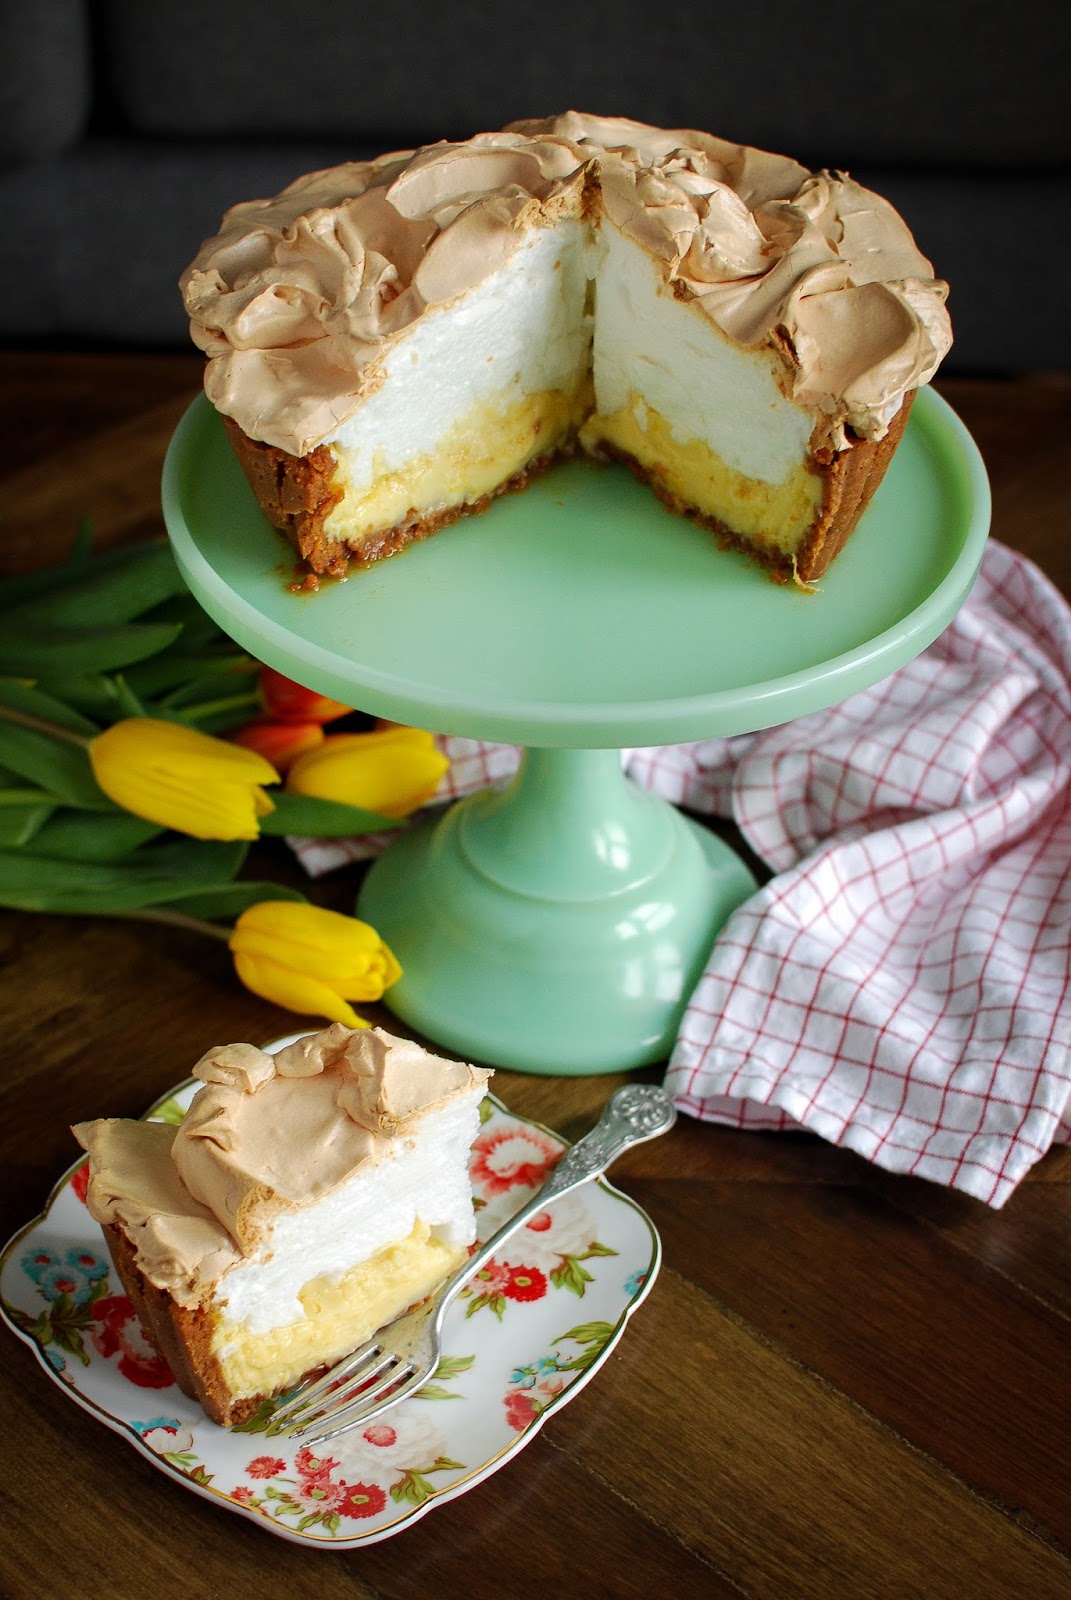 Lemon meringue pie with a gingersnap crust.